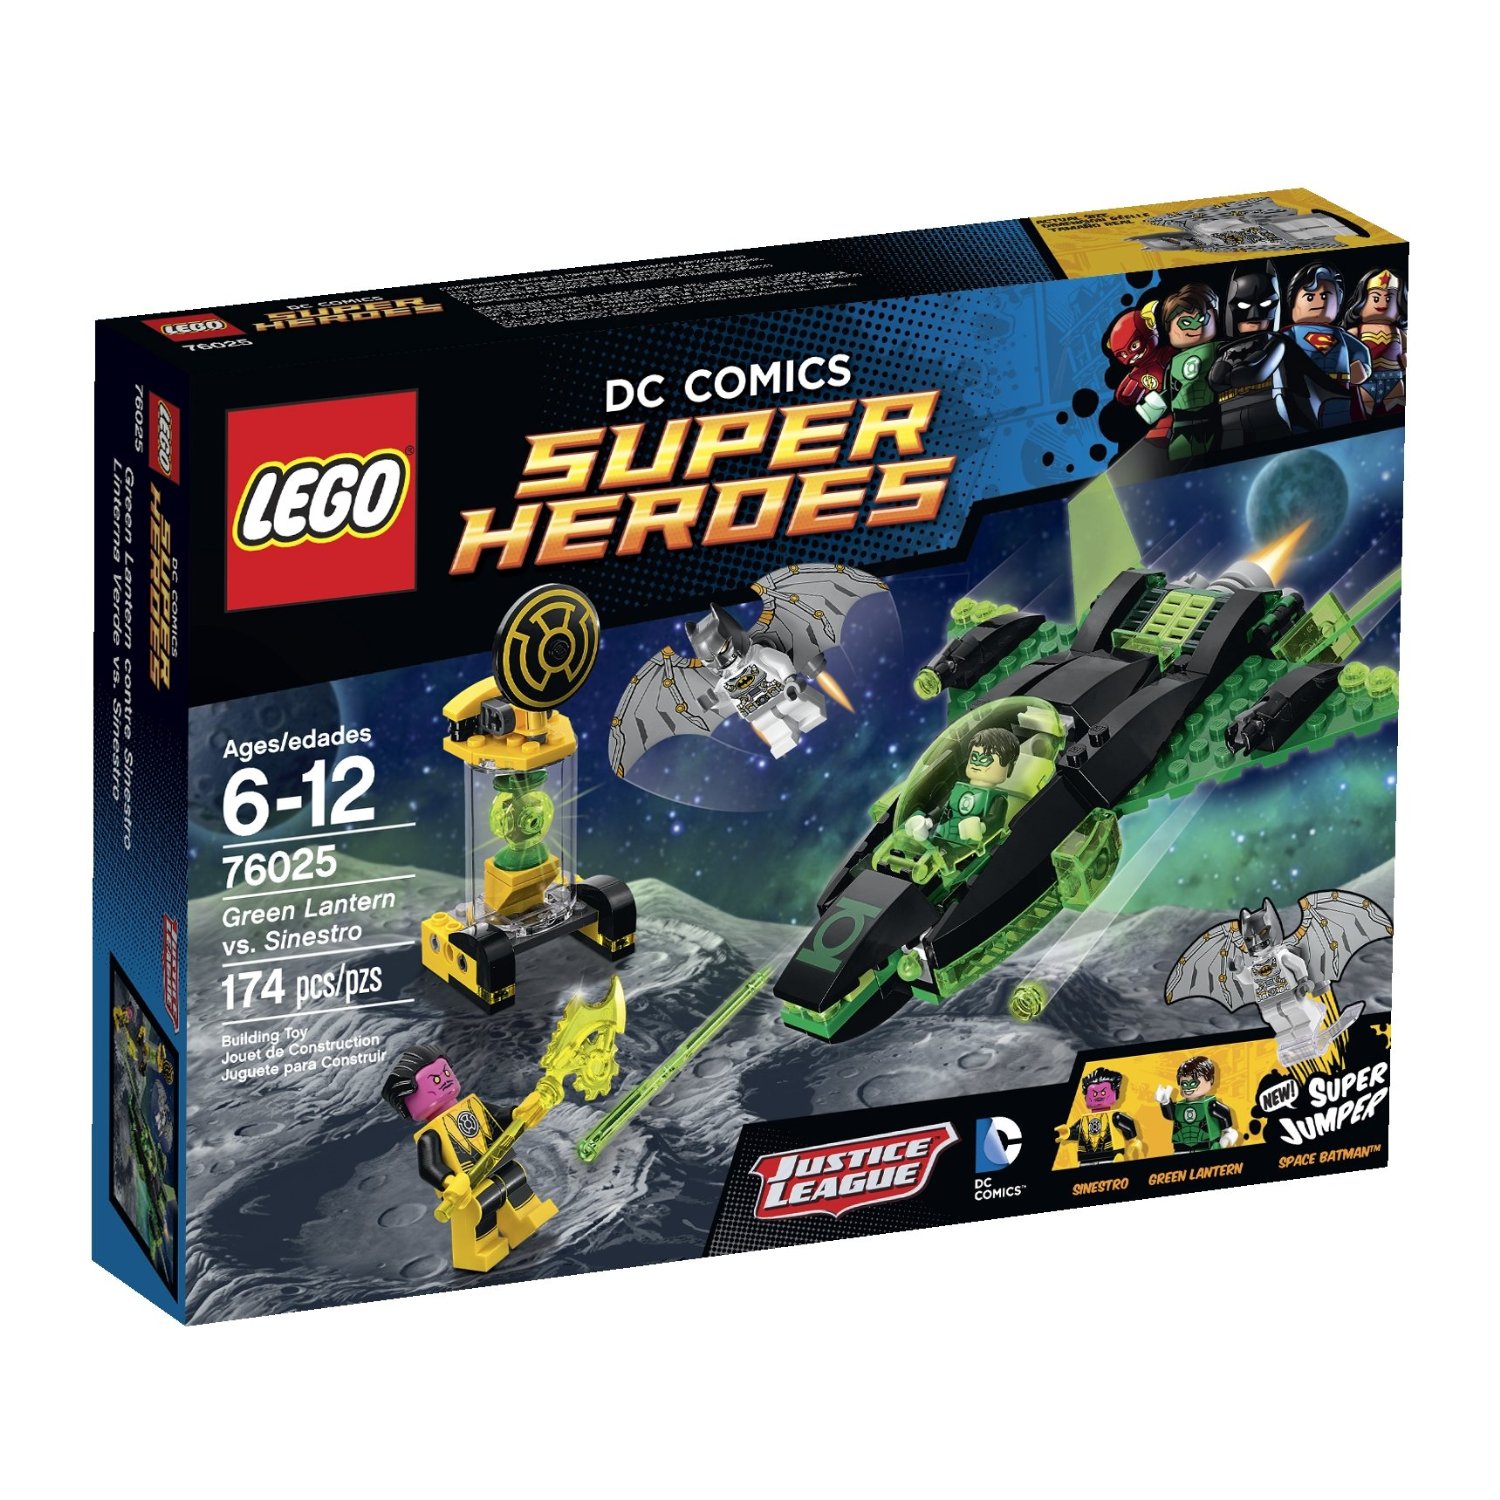 LEGO Superheroes Green Lantern vs. Sinestro – Only $12.06!